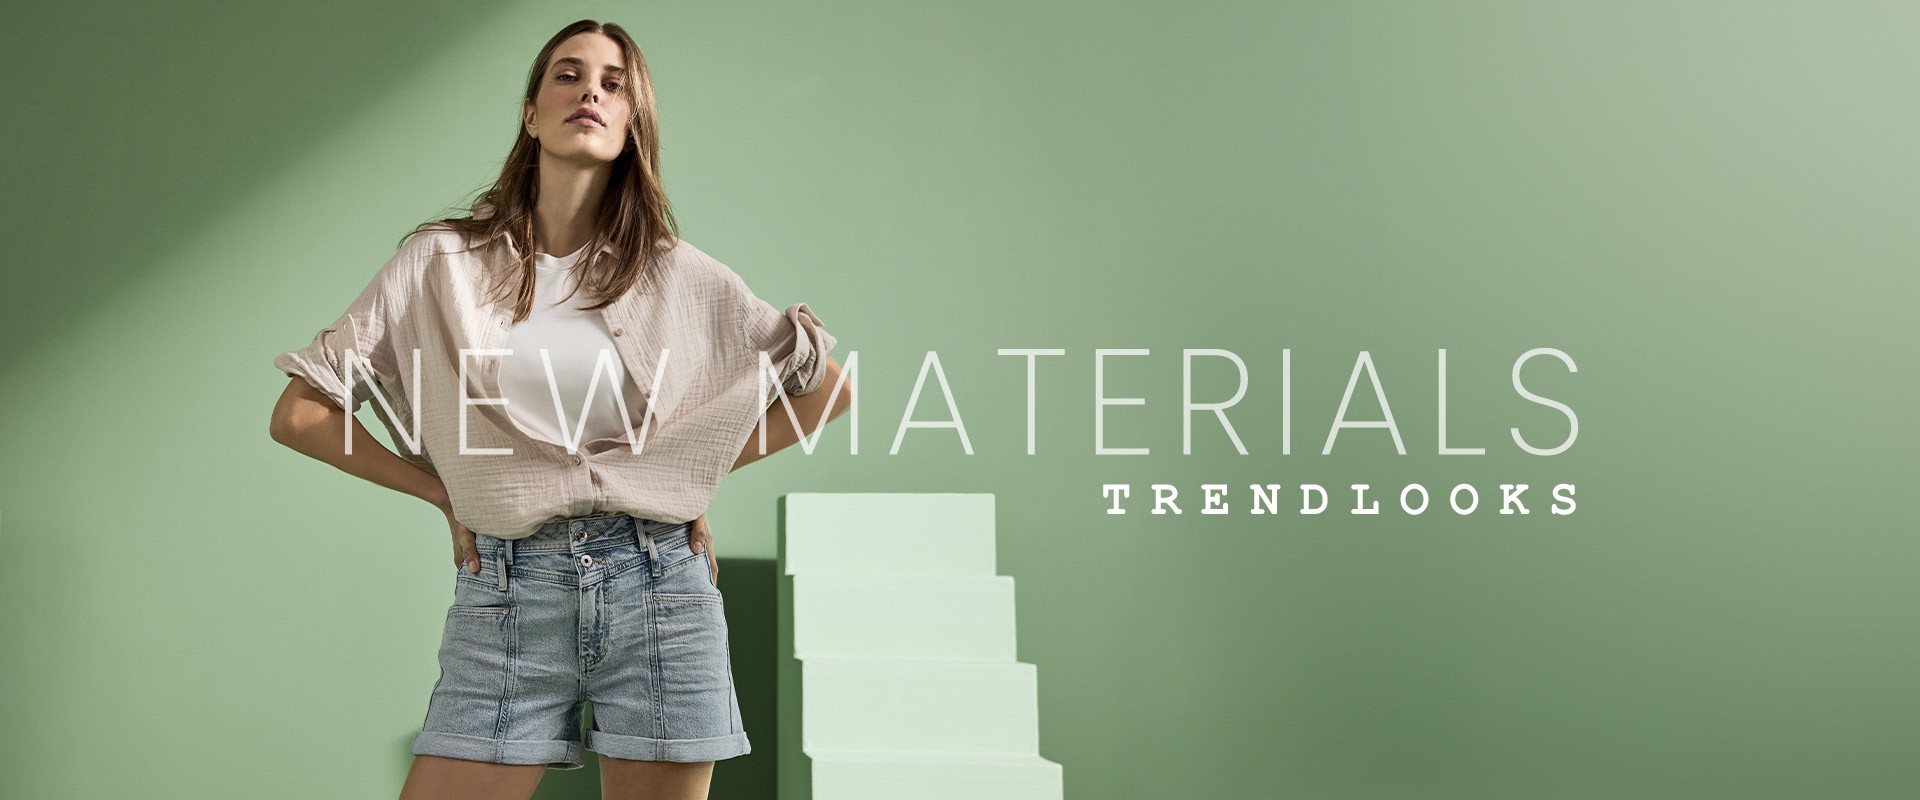 New materials - Trendlooks